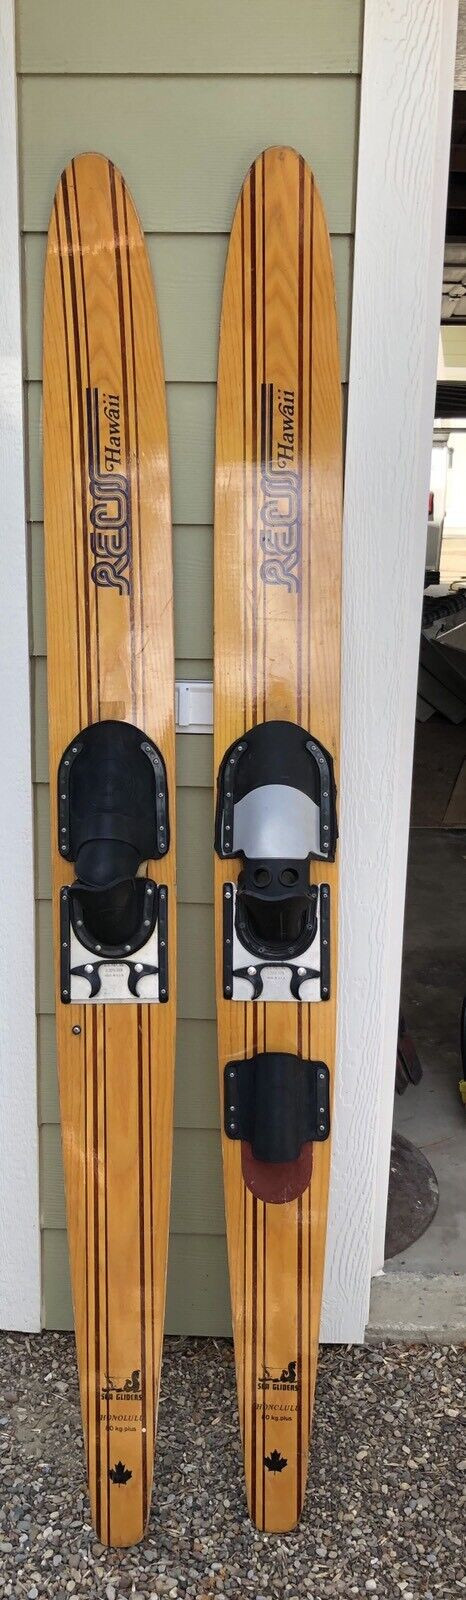 Wooden and fibreglass skis in Ski in Lethbridge